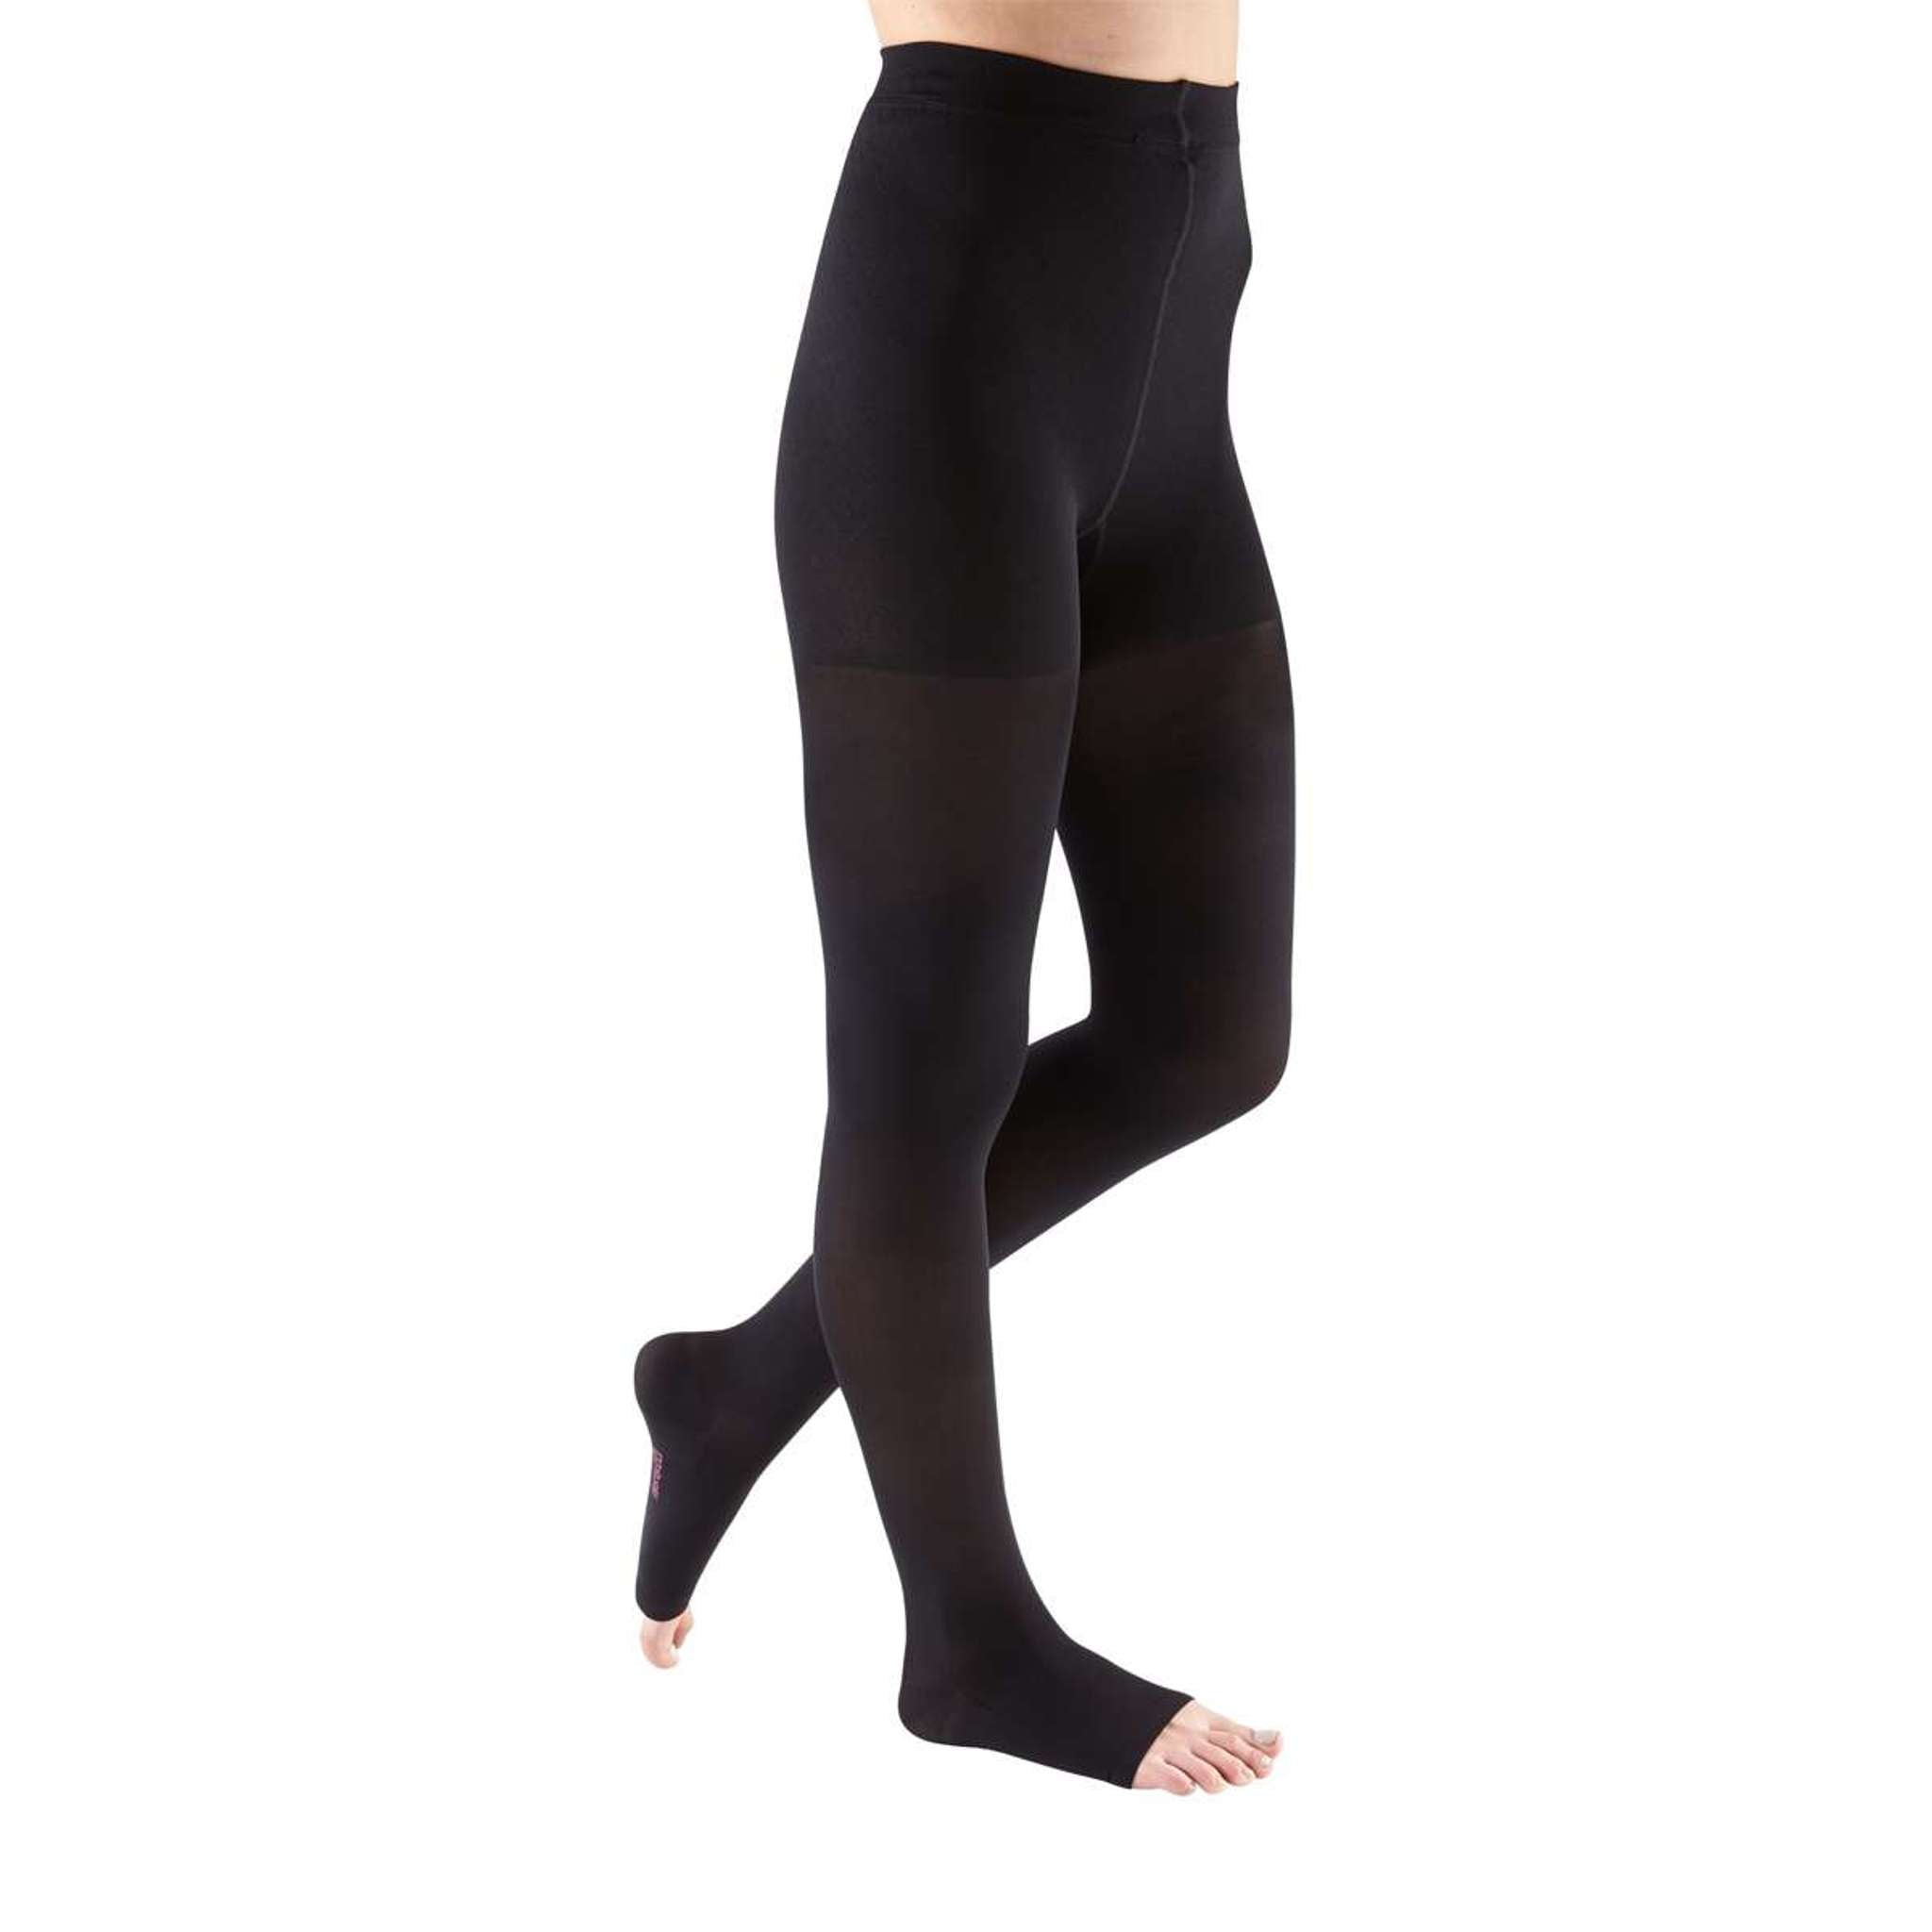 20-30 mmHg Waist High Pantyhose, Tights, Compression Stockings